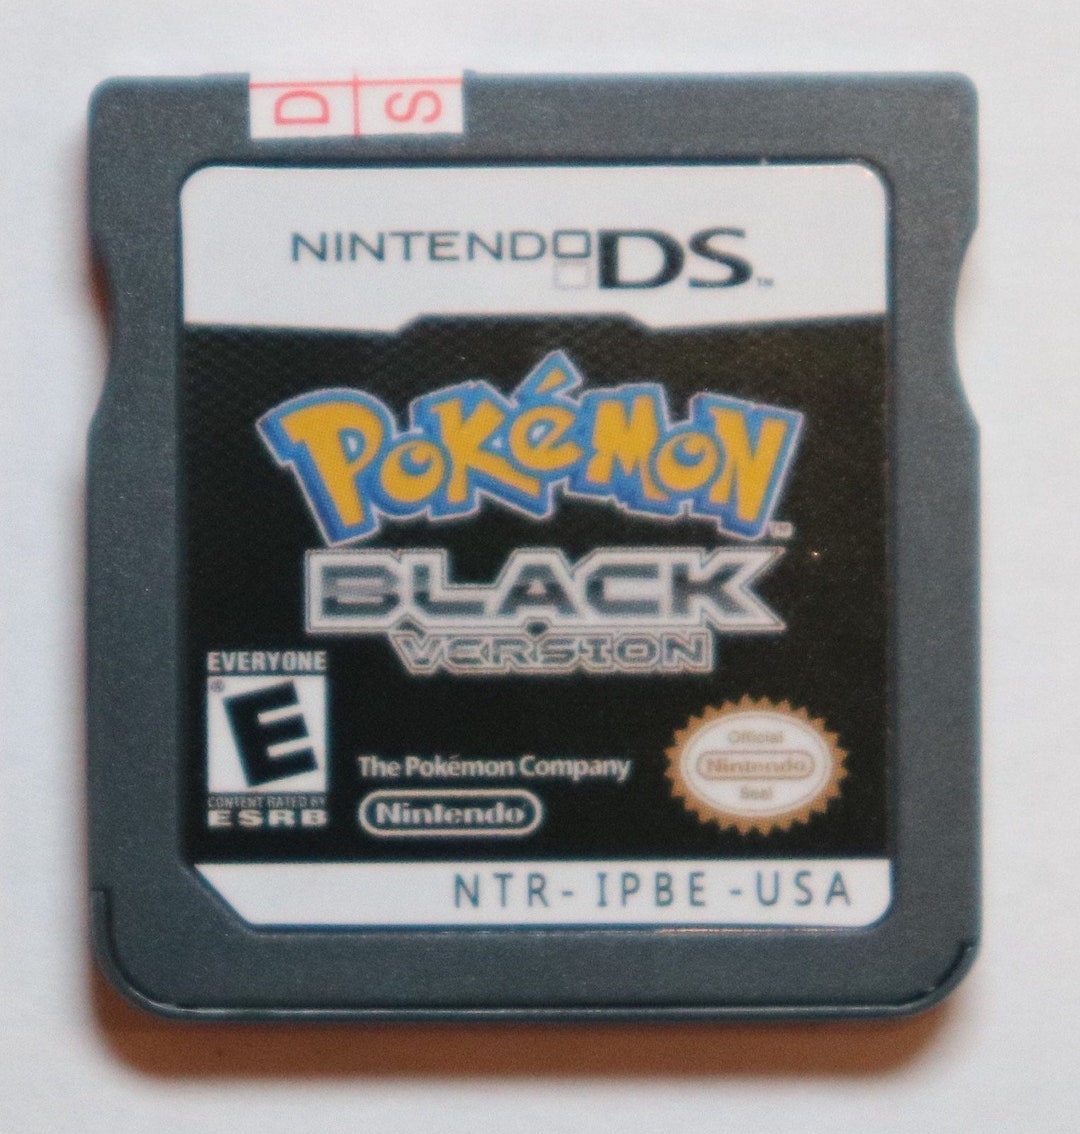 Pokémon Black and White ROM - Nintendo DS Game